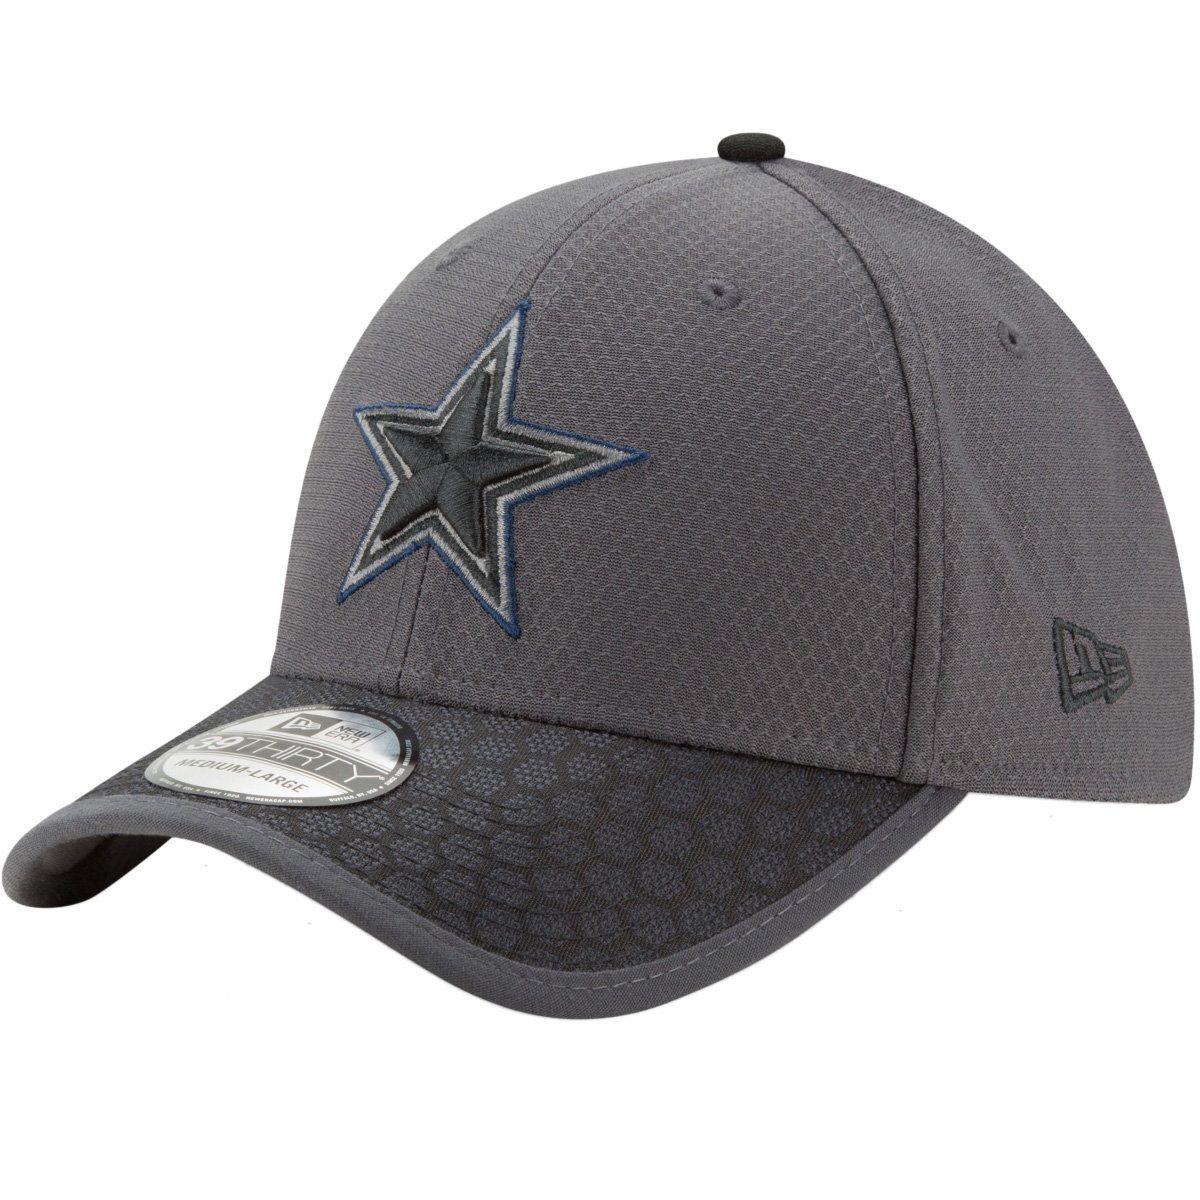 Dallas New SIDELINE Flex 39Thirty NFL Era Cowboys Cap